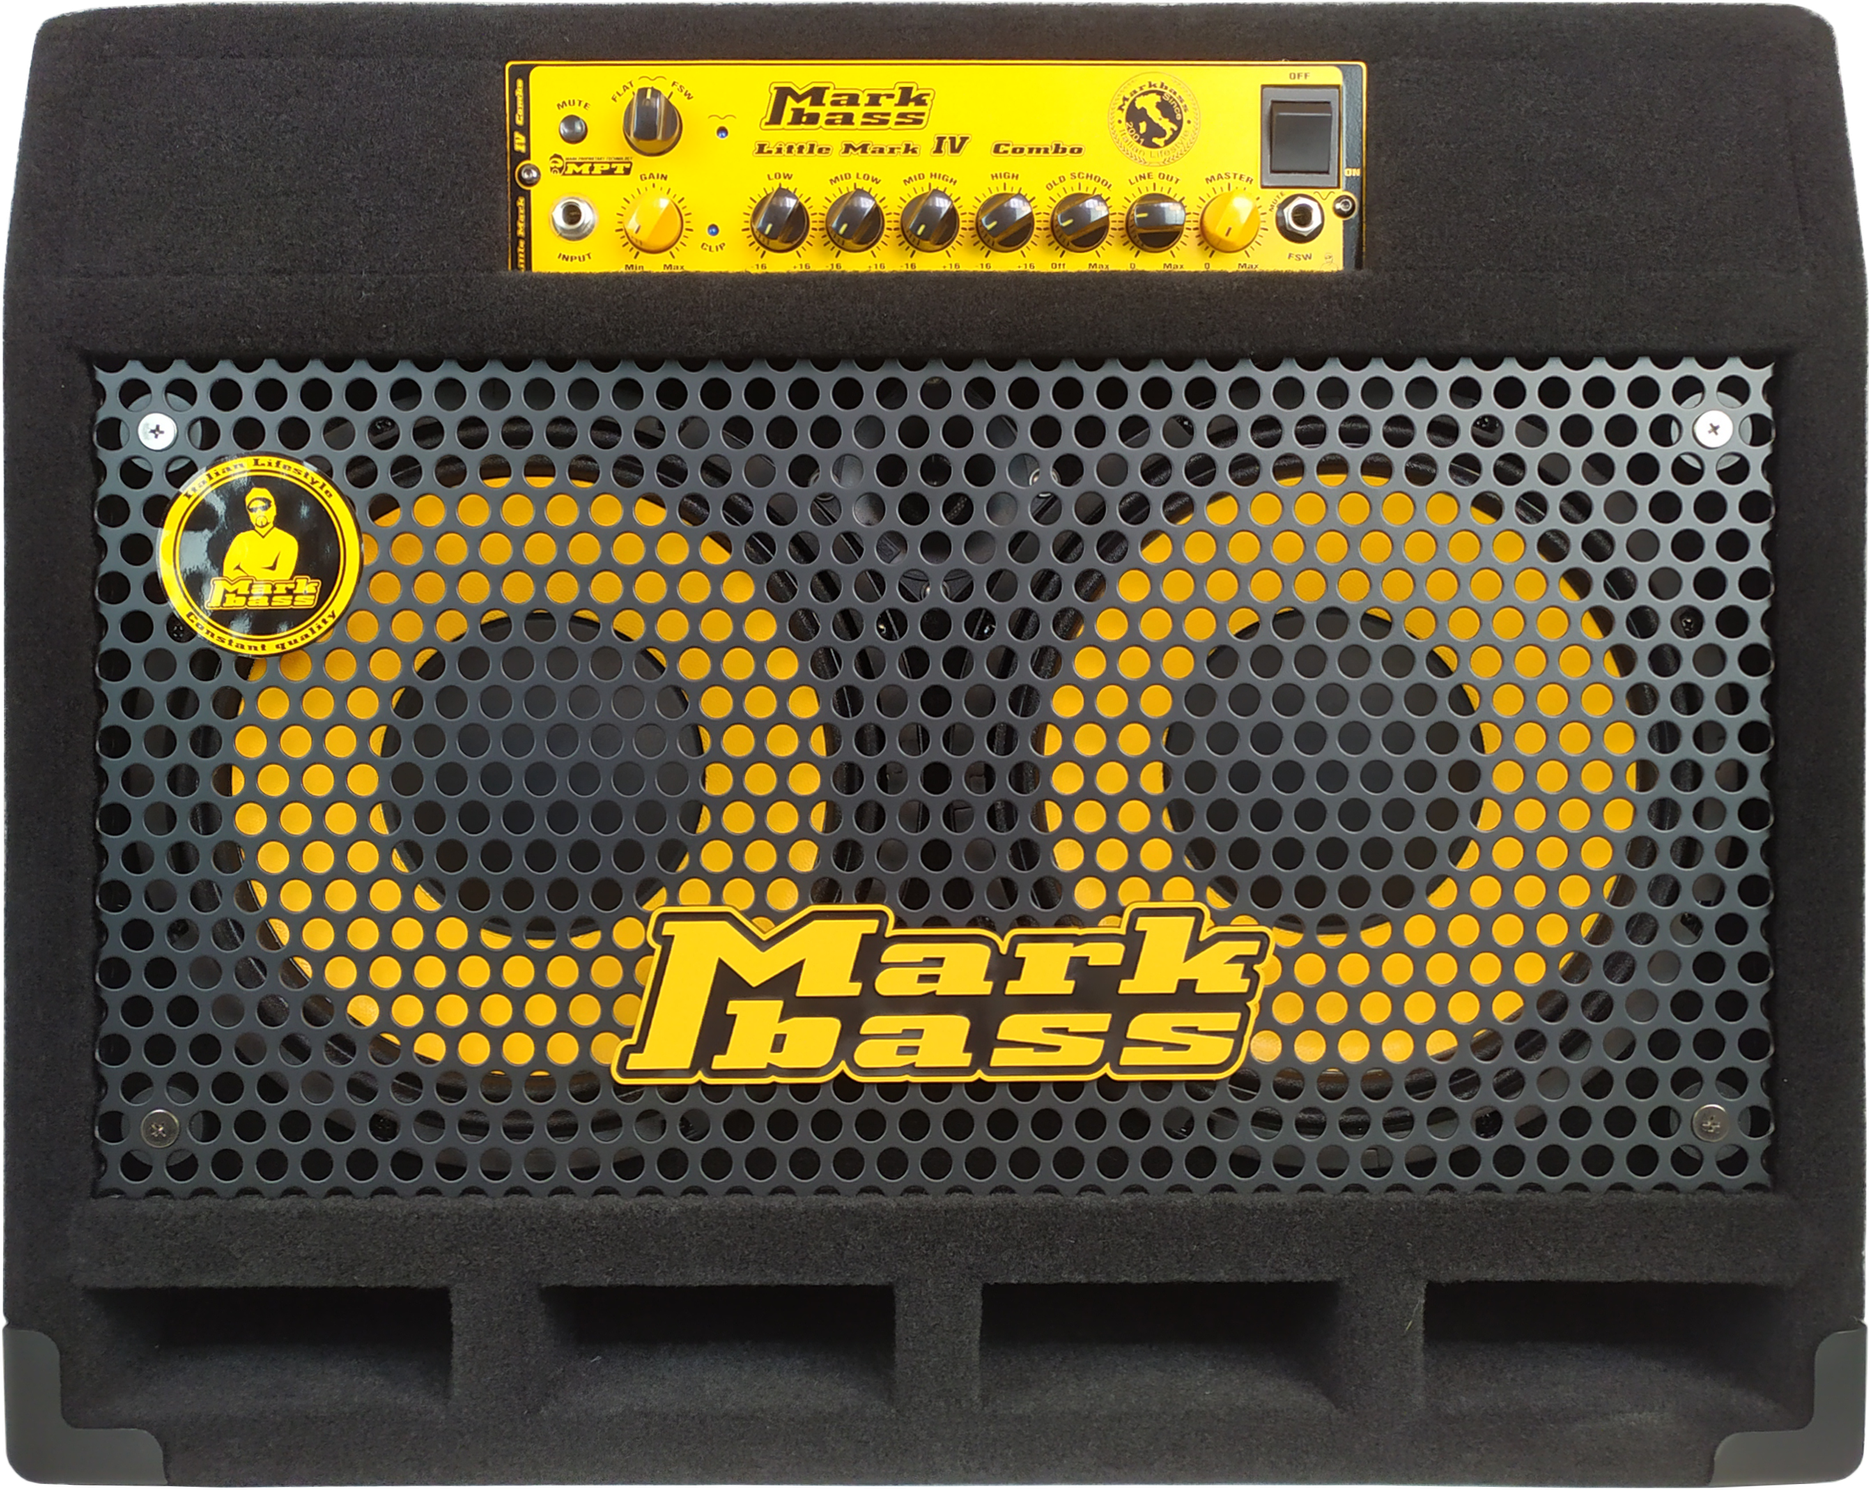 Markbass Cmd 102p Iv 2x10 500w - Combo amplificador para bajo - Main picture